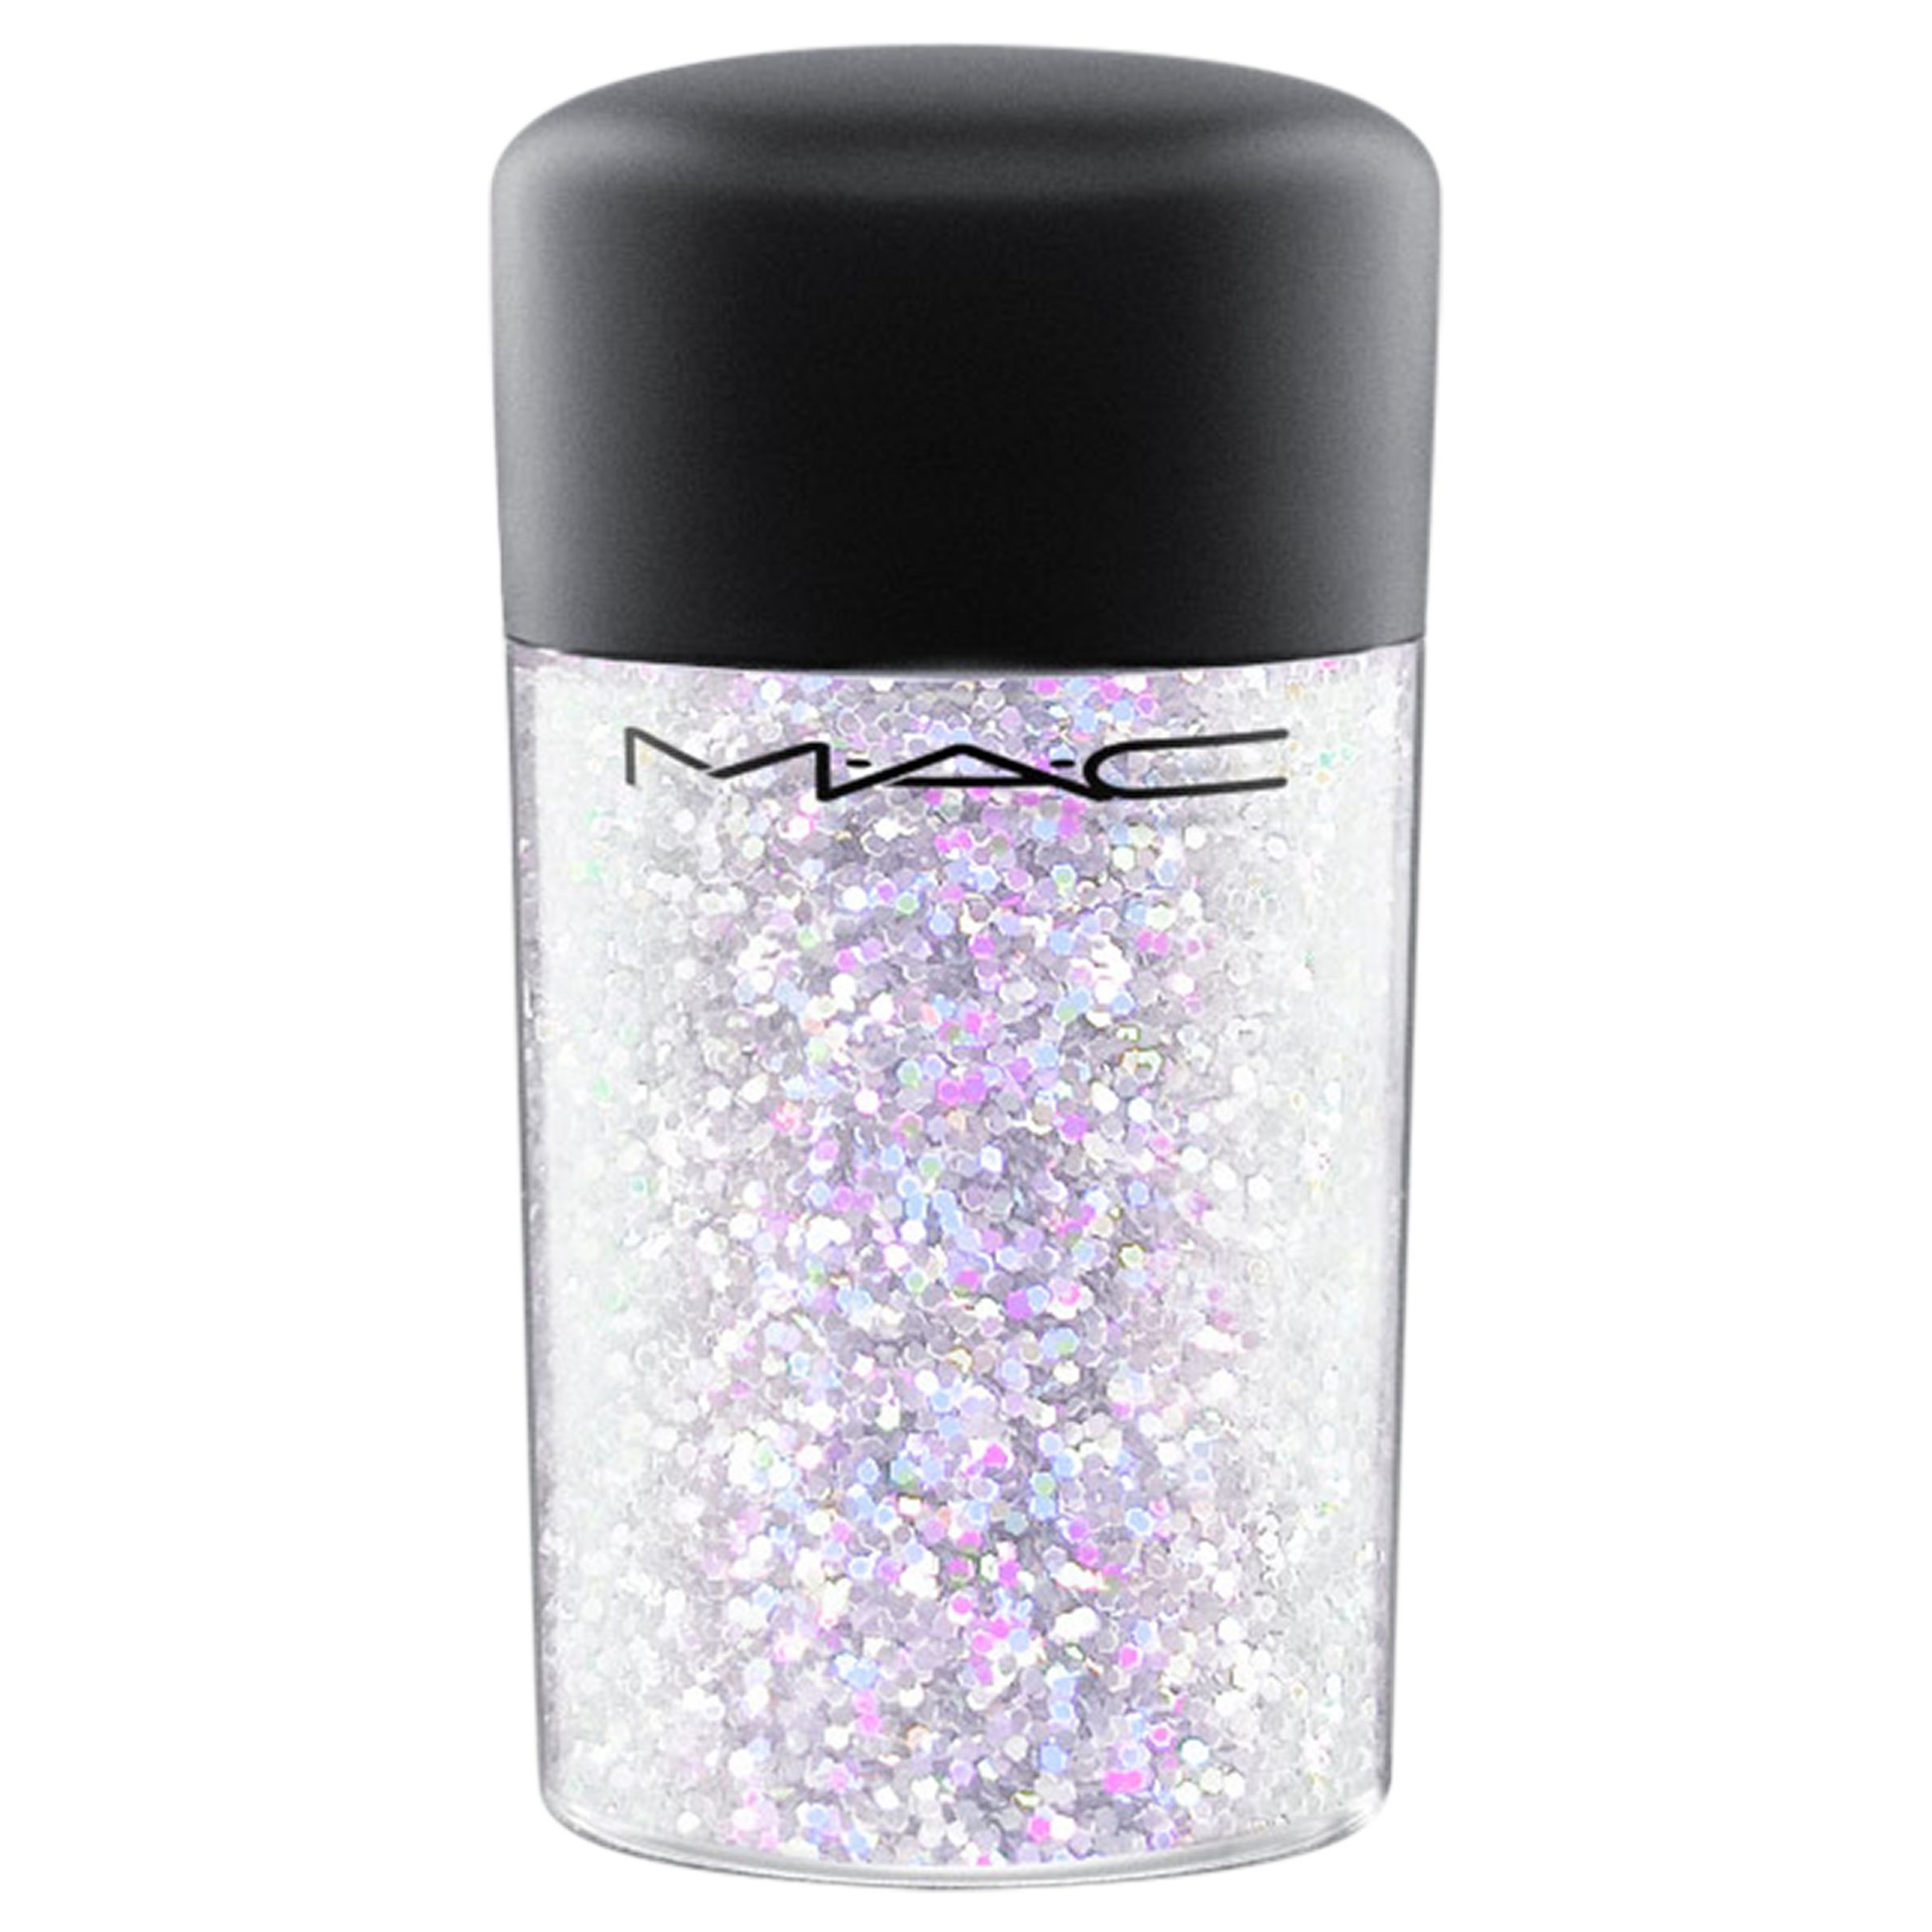 MAC Glitter - Galactic Holographic Glitter, Iridescent White 1